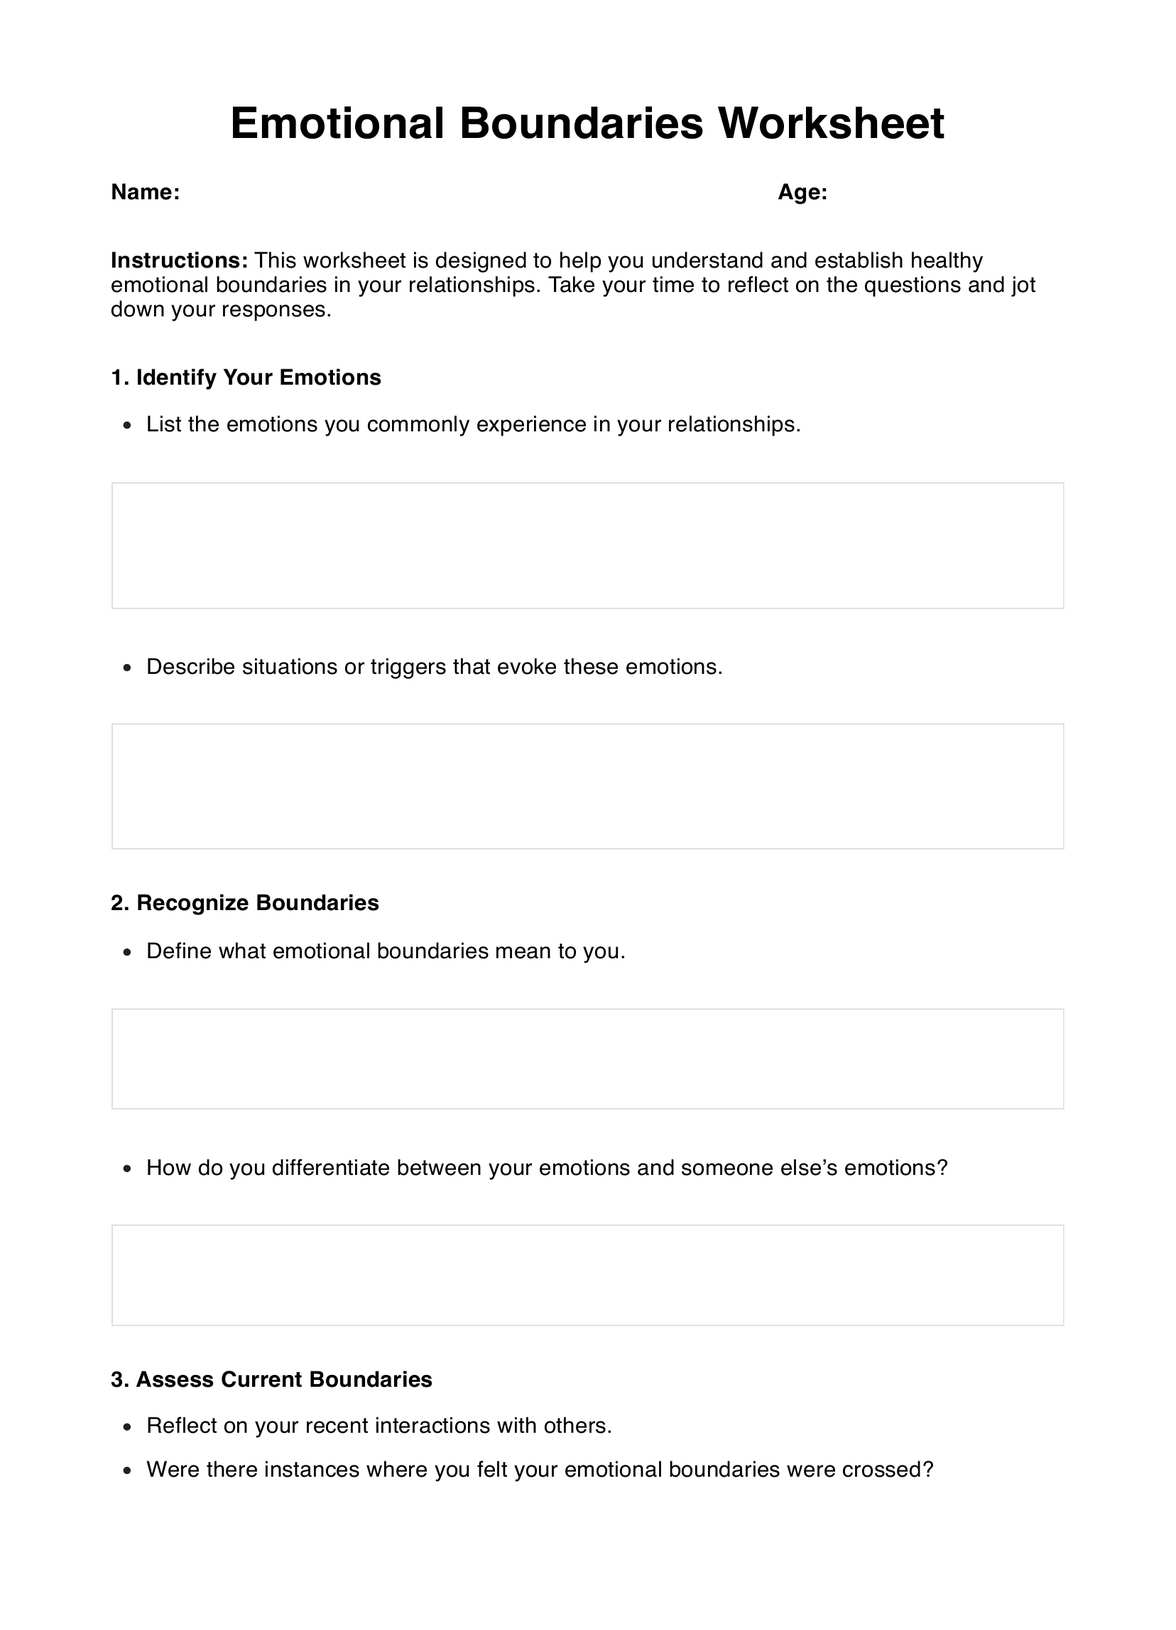 Emotional Boundaries Worksheets PDF Example